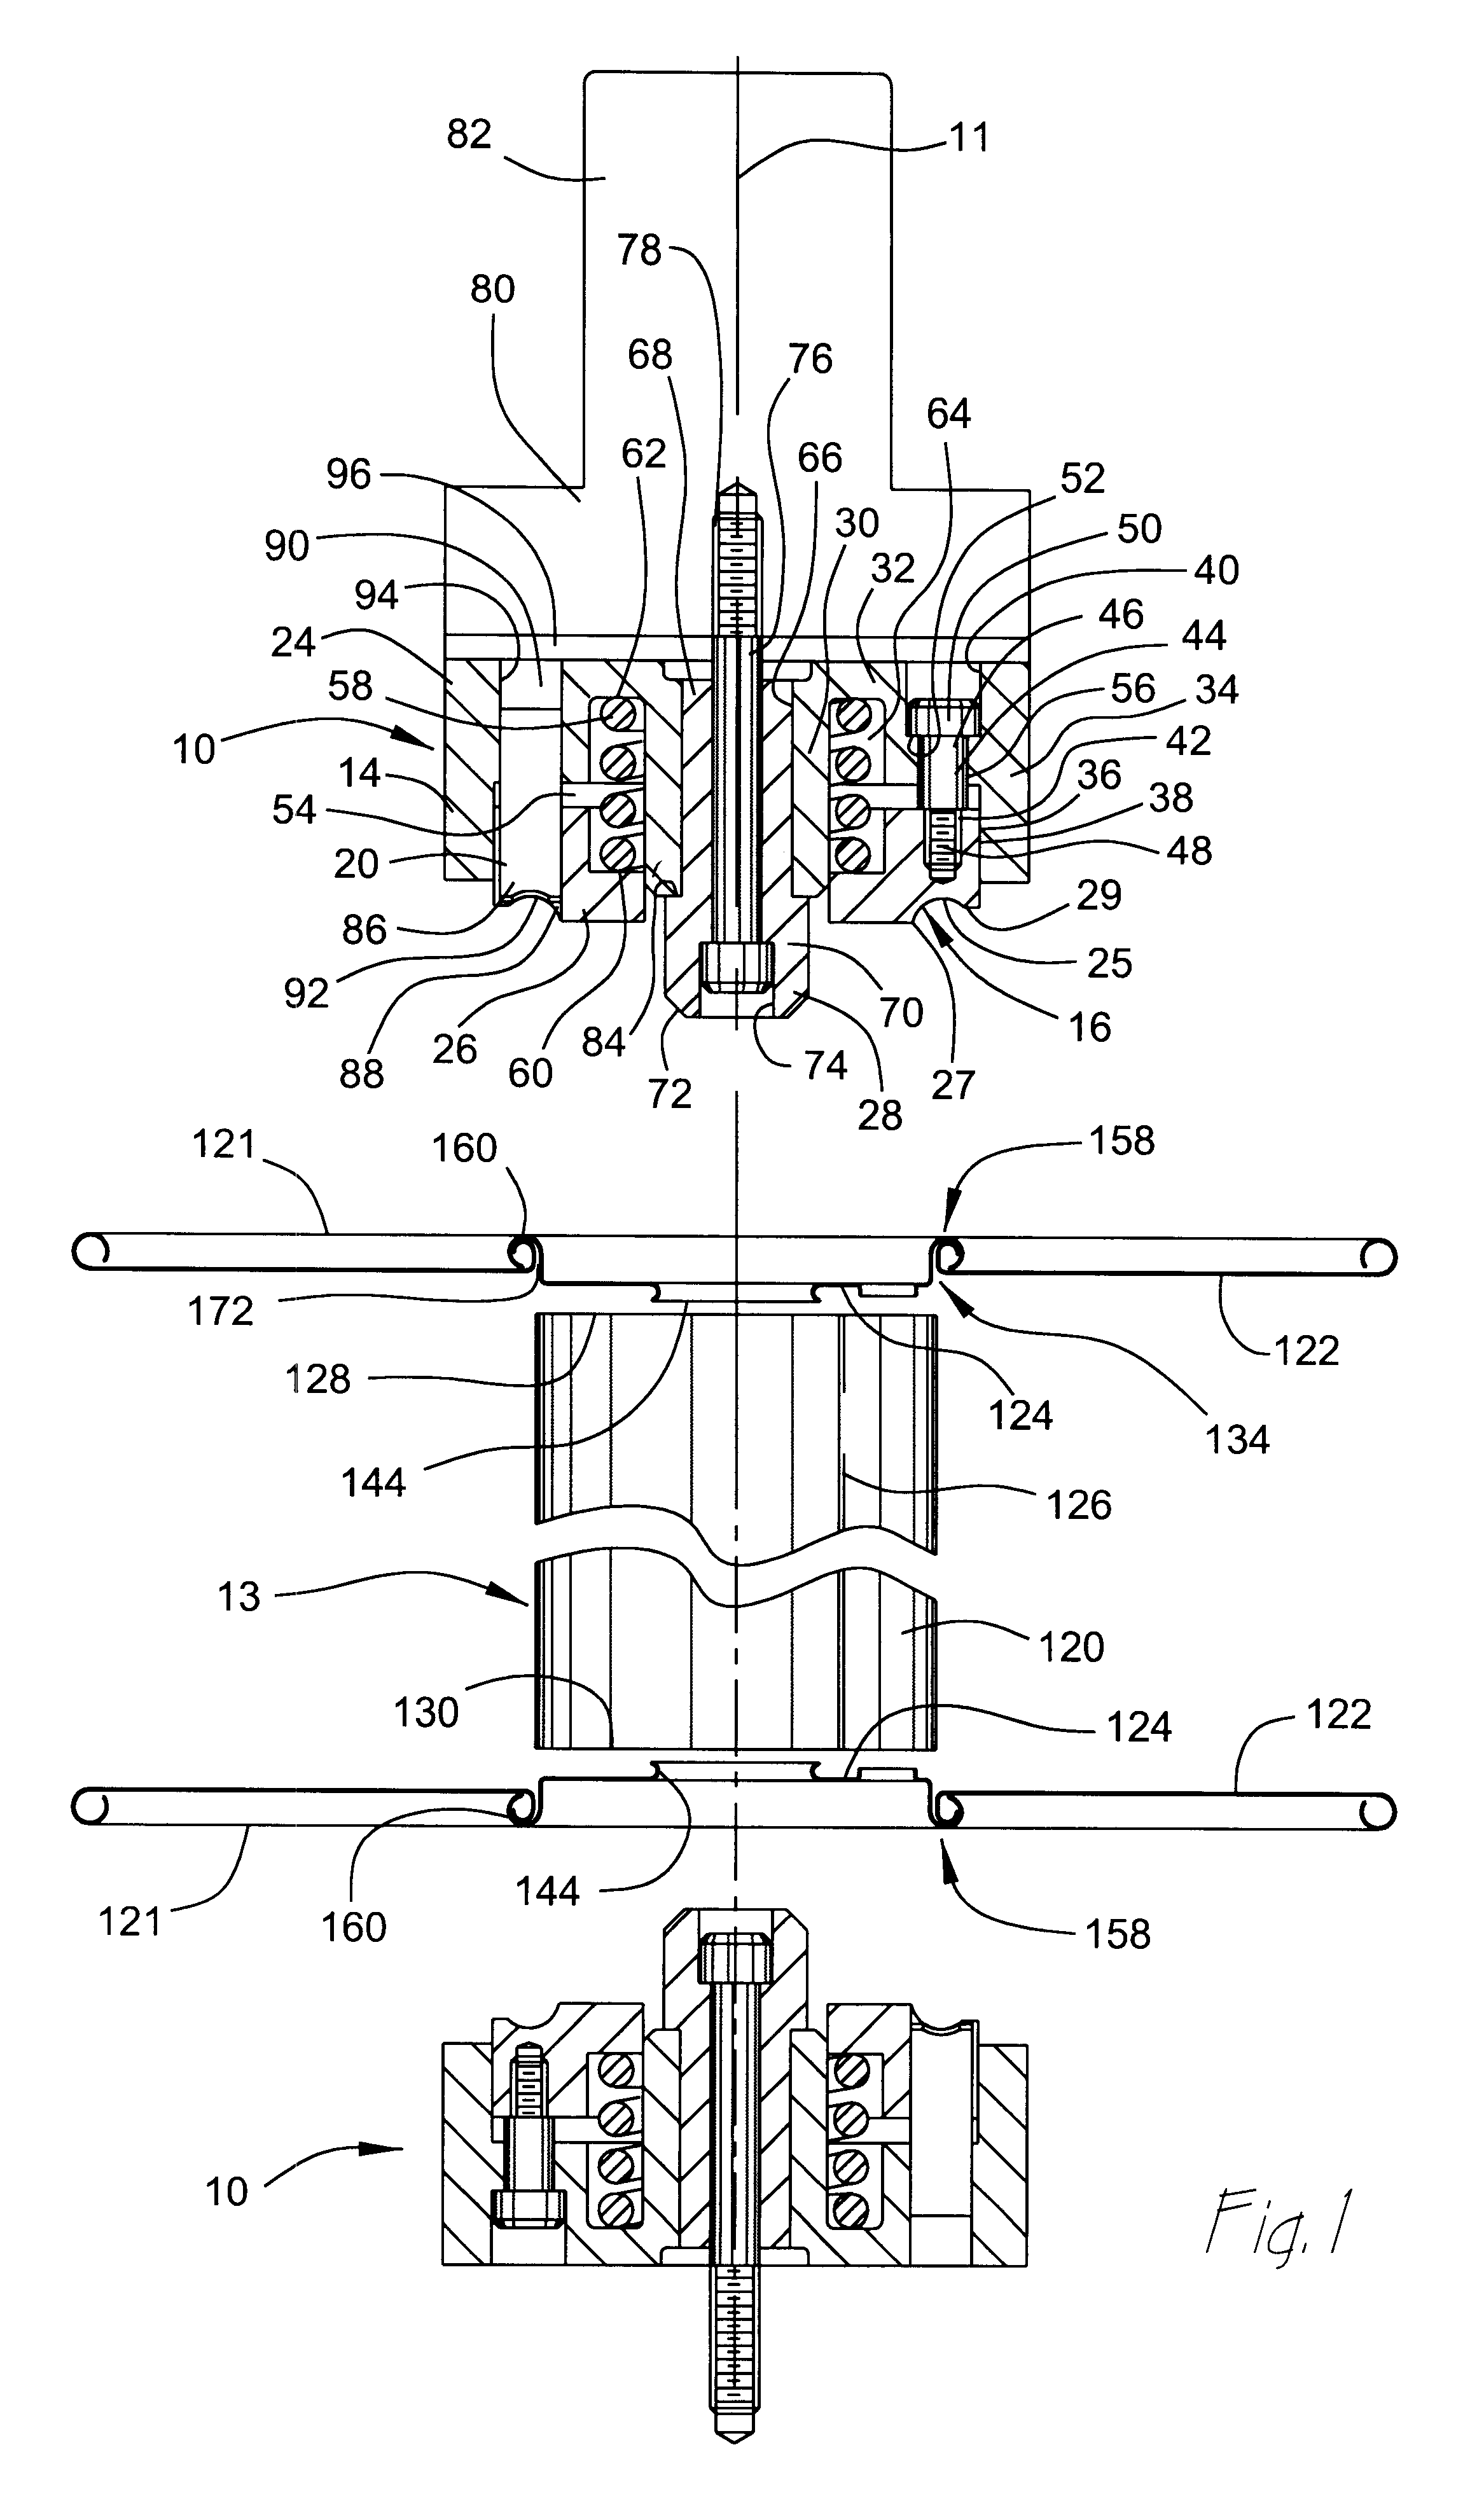 Die for assembling metal spool having high torque transmitting capacity between spool components